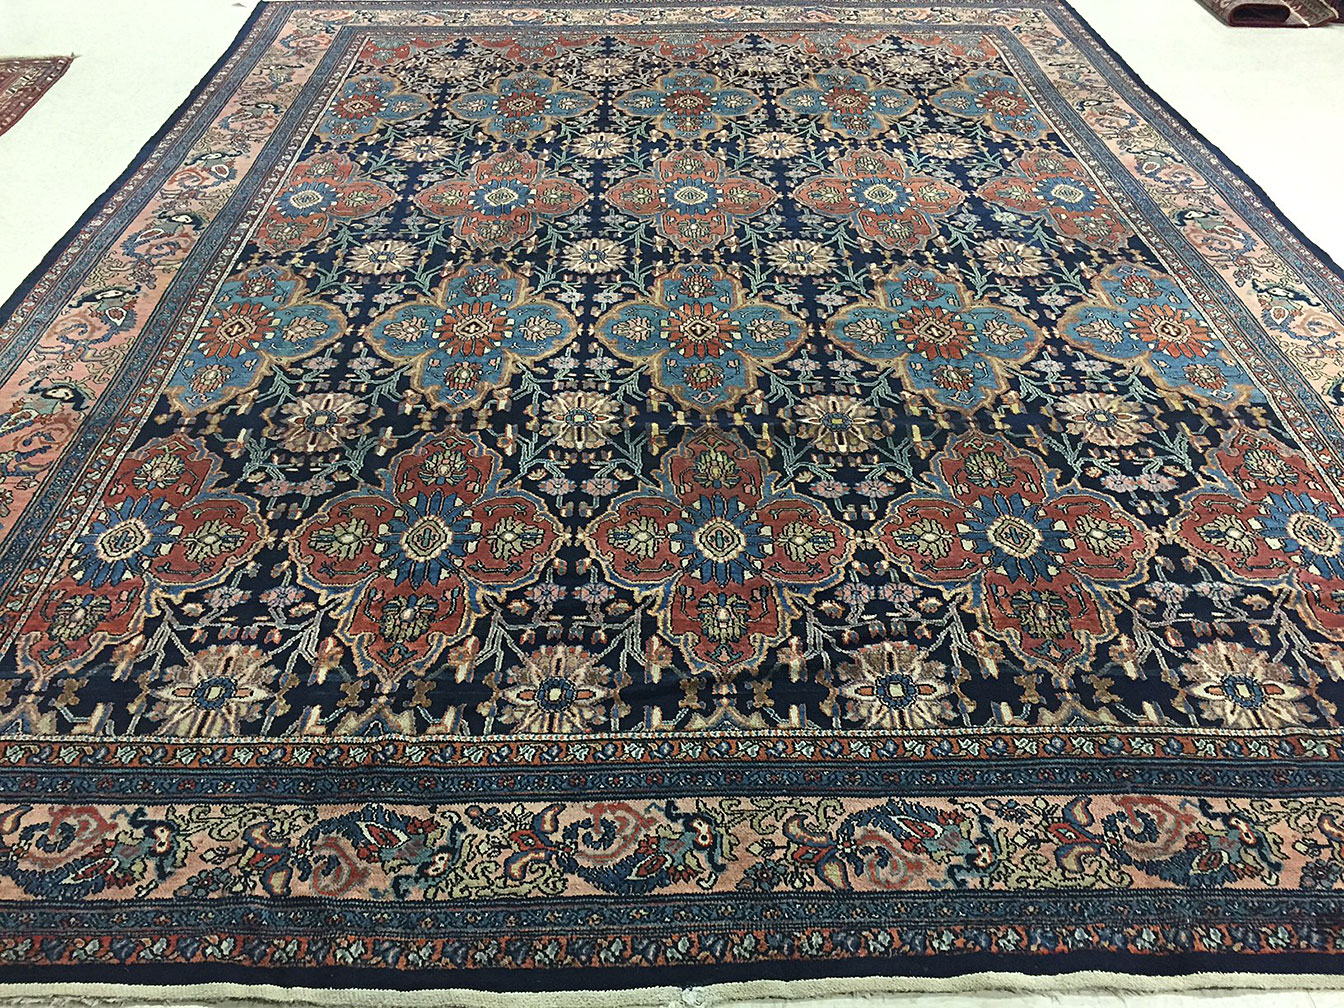 Antique bibi kabad Carpet - # 51519